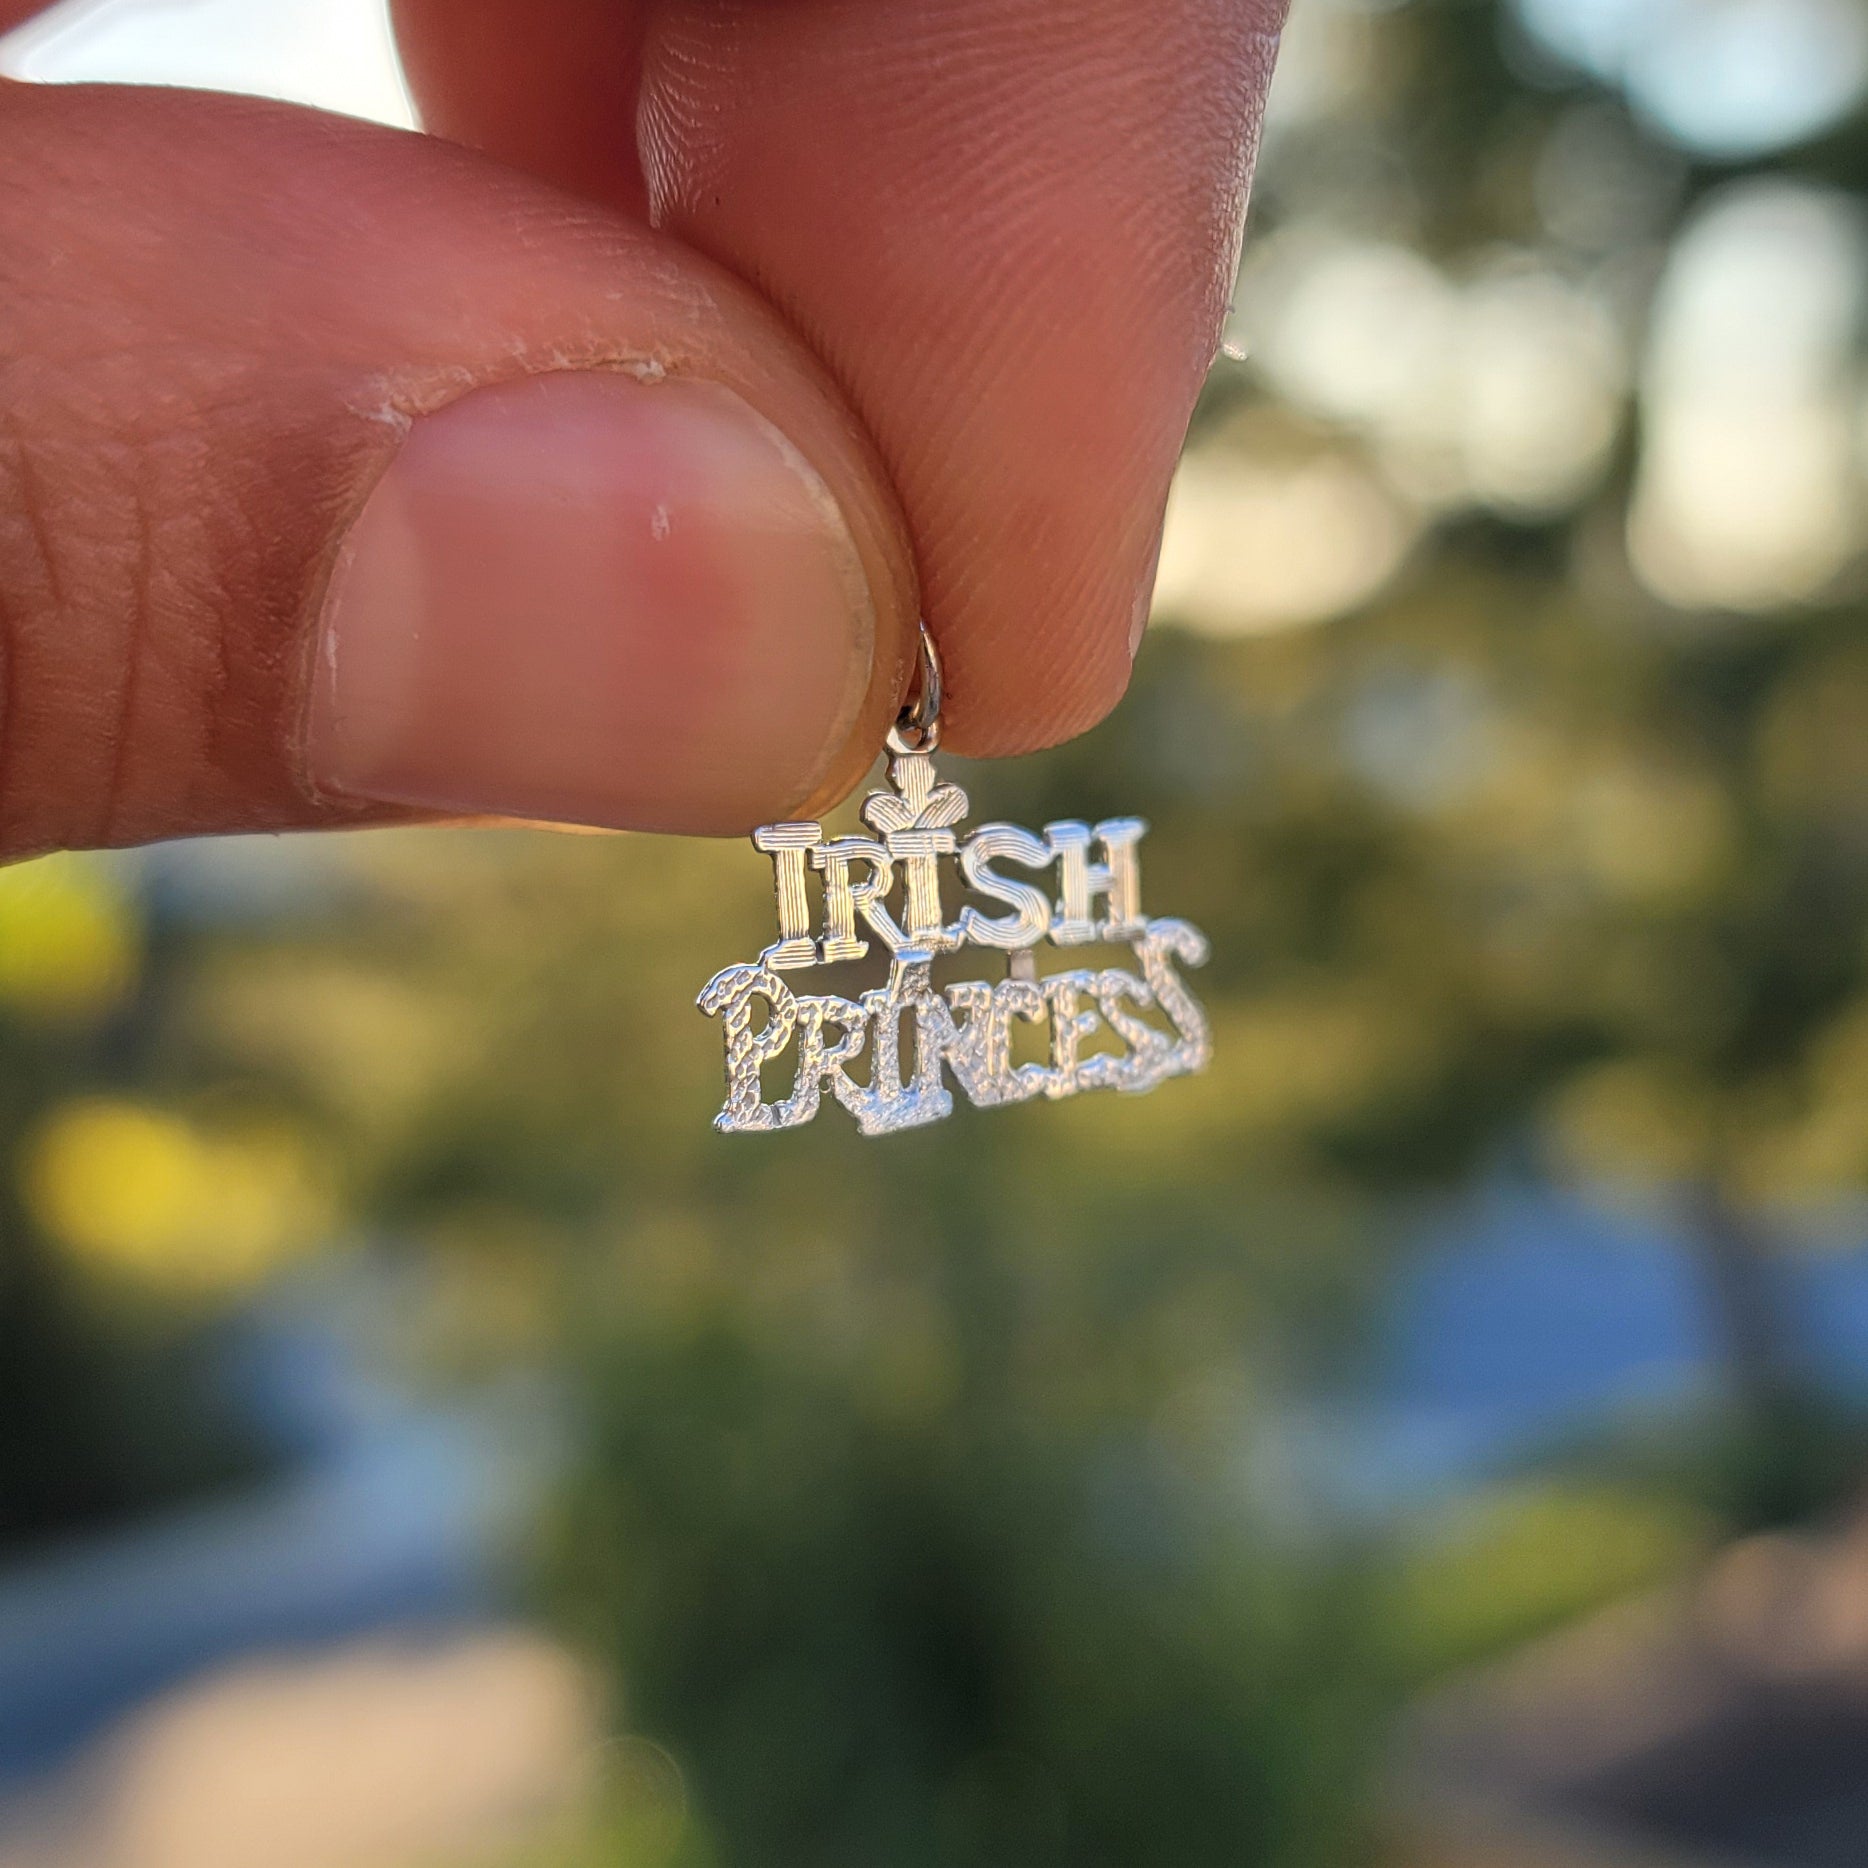 14K or 18K Gold Irish Princess Pendant